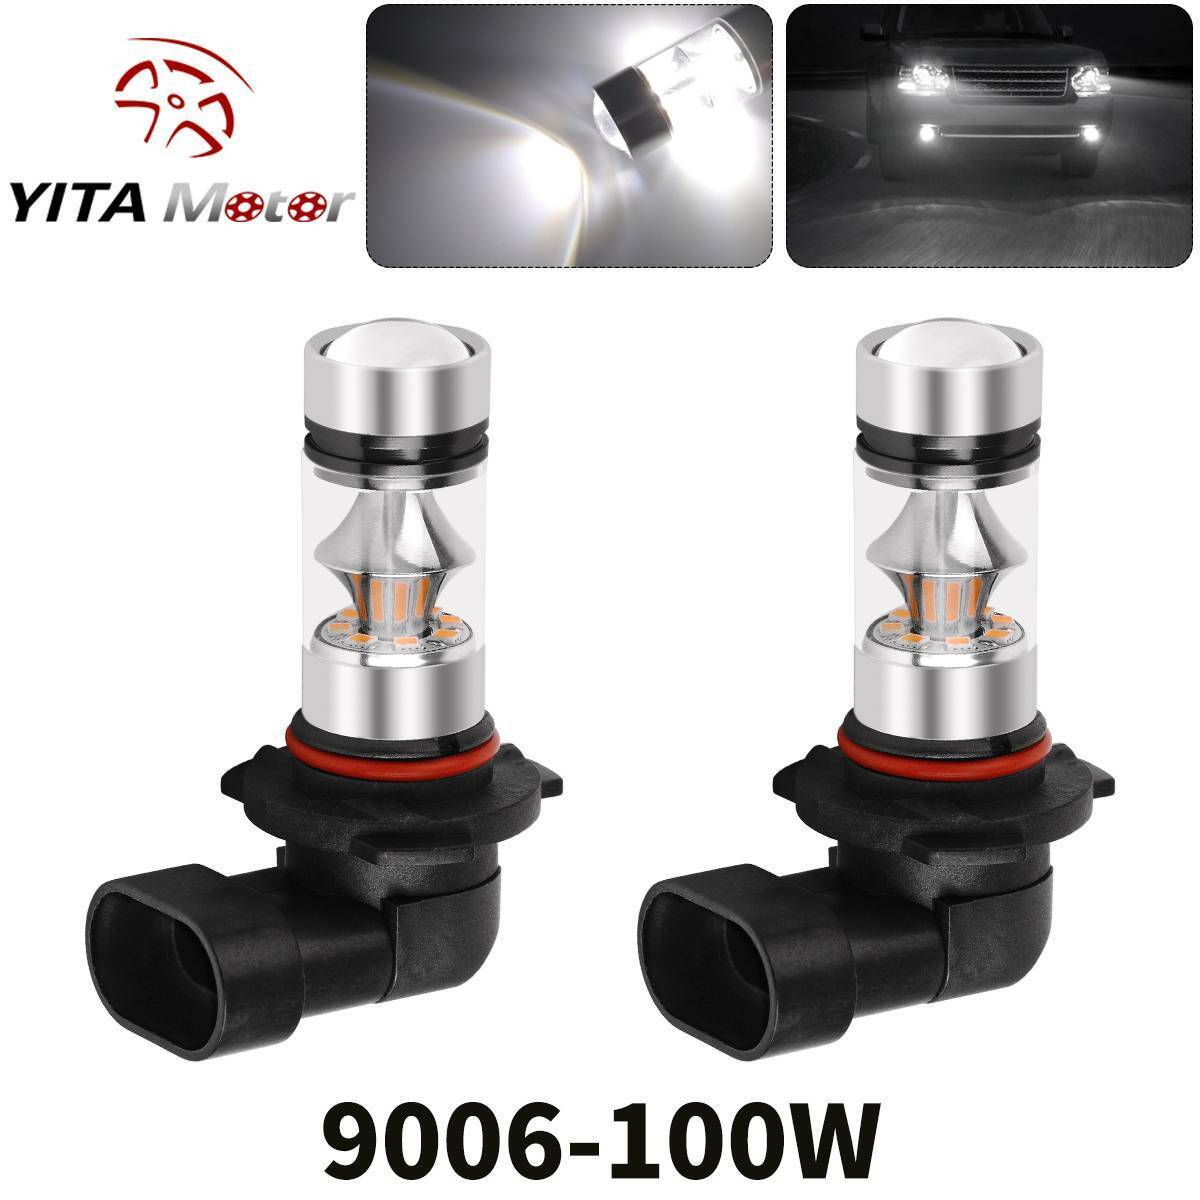 YITAMOTOR 9006 HB4 High Power 2323 100W Led Fog Light Bulbs Driving DRL Lights